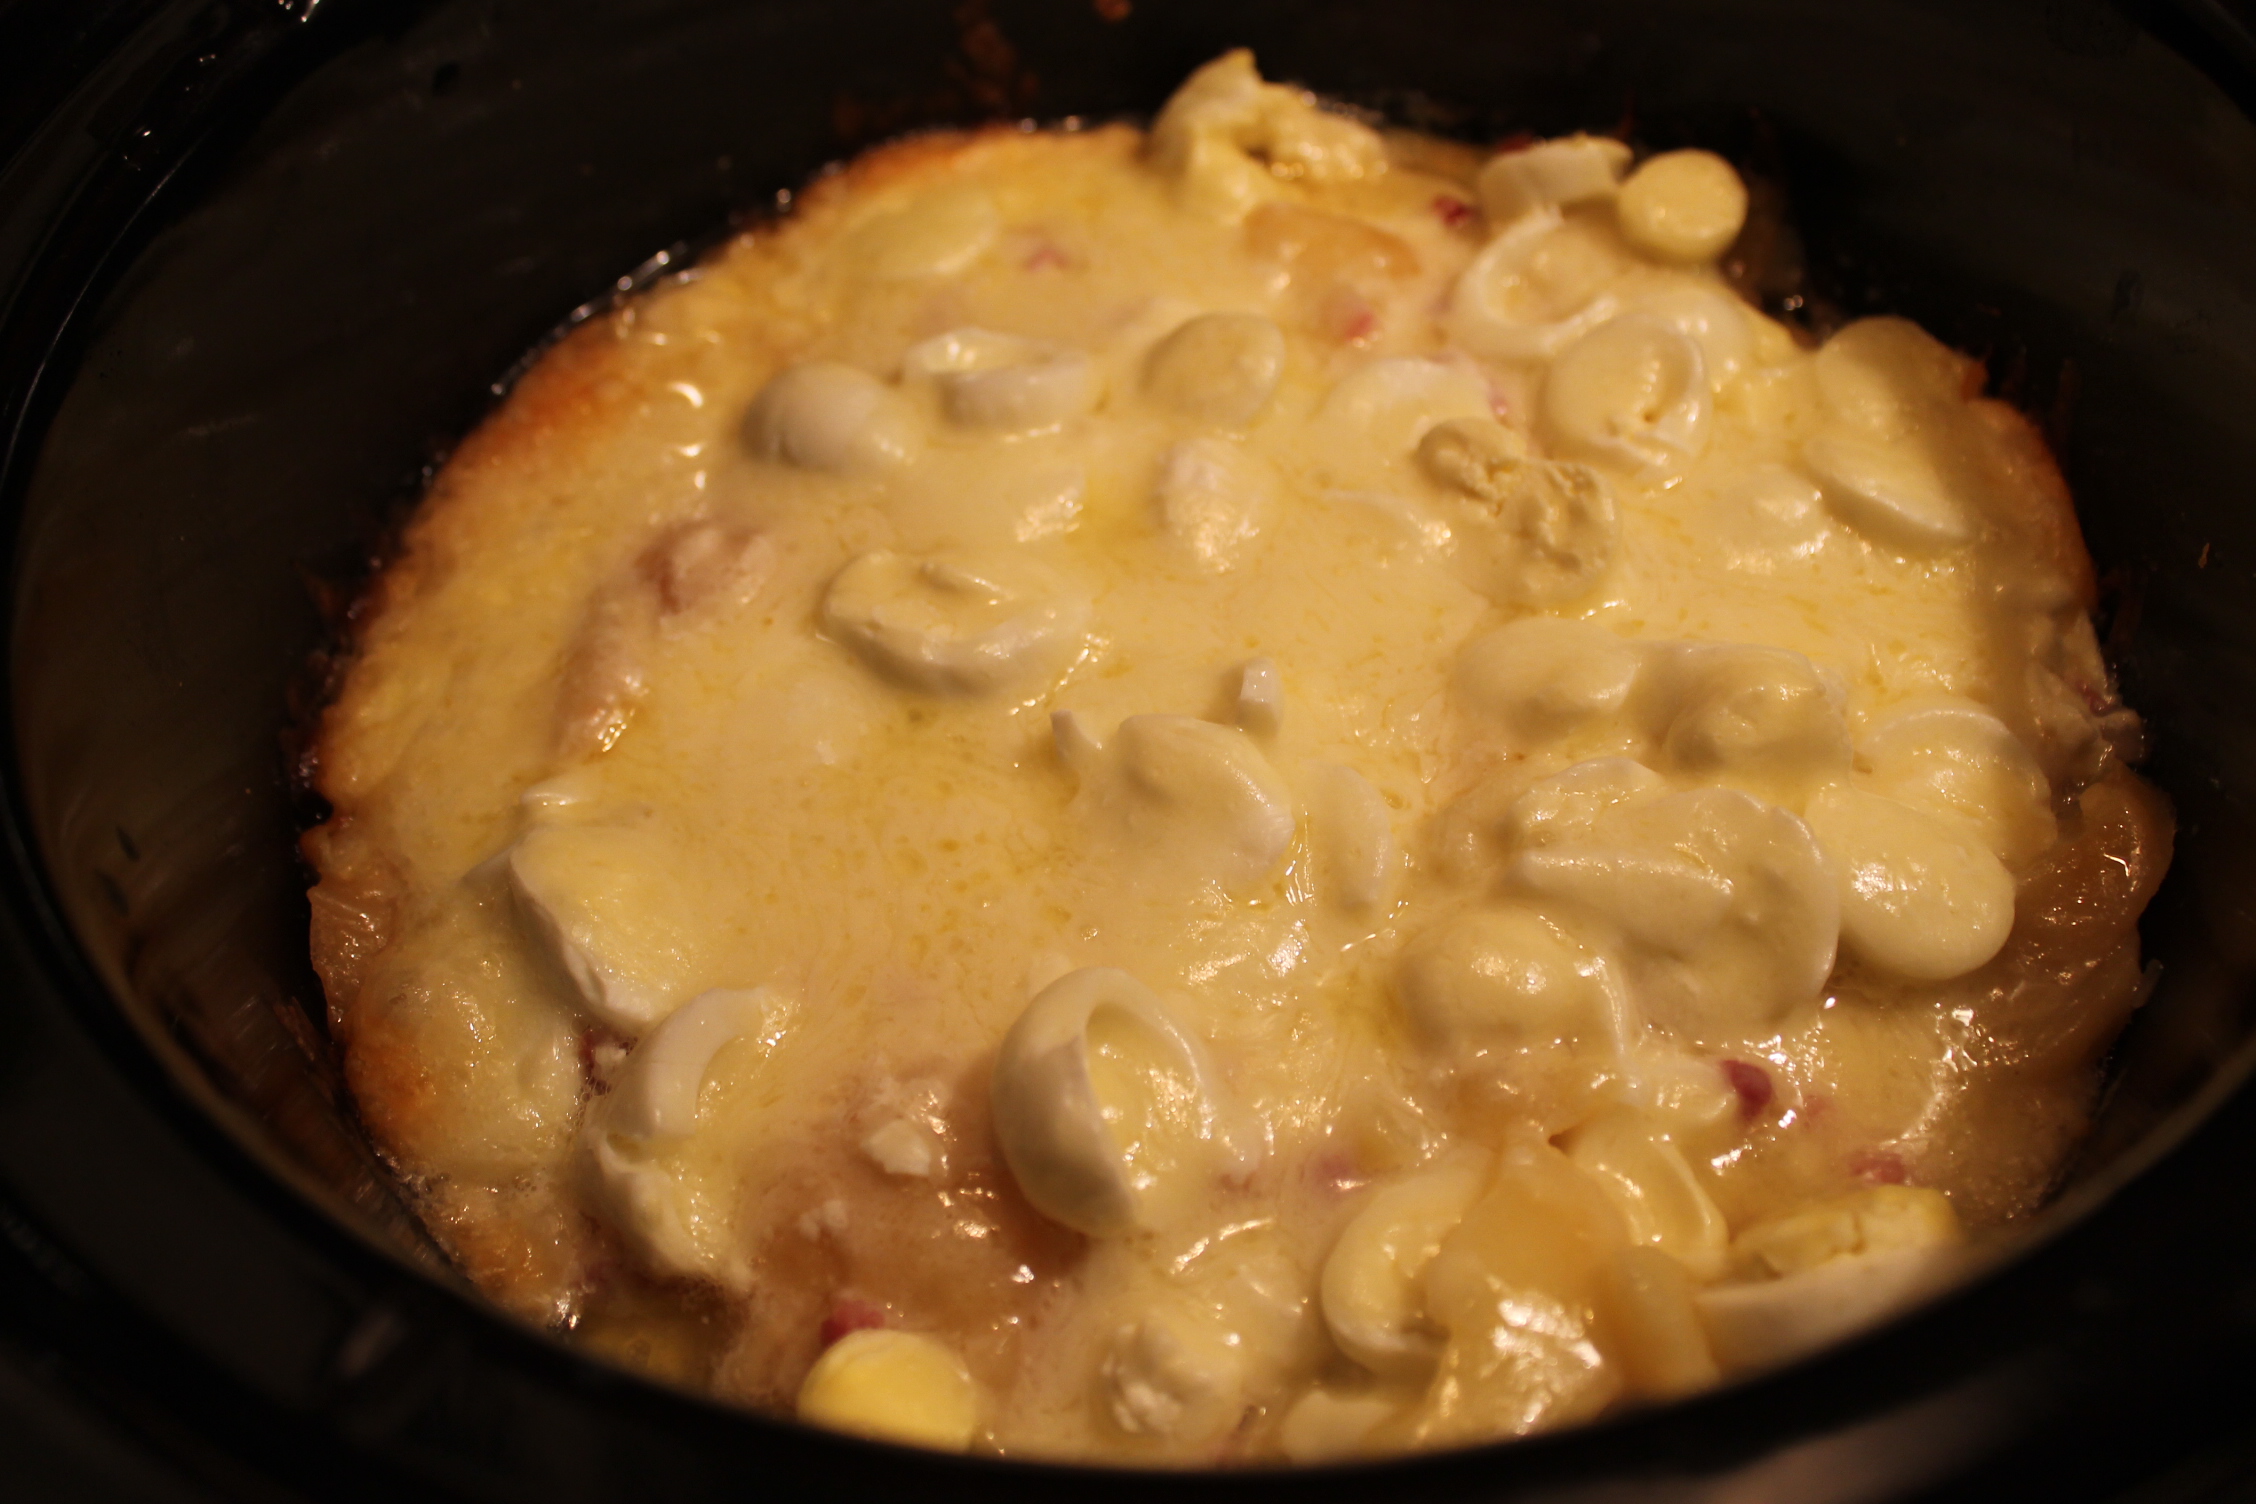 Rakott krumply - cartofi in straturi la slow cooker Crock-Pot